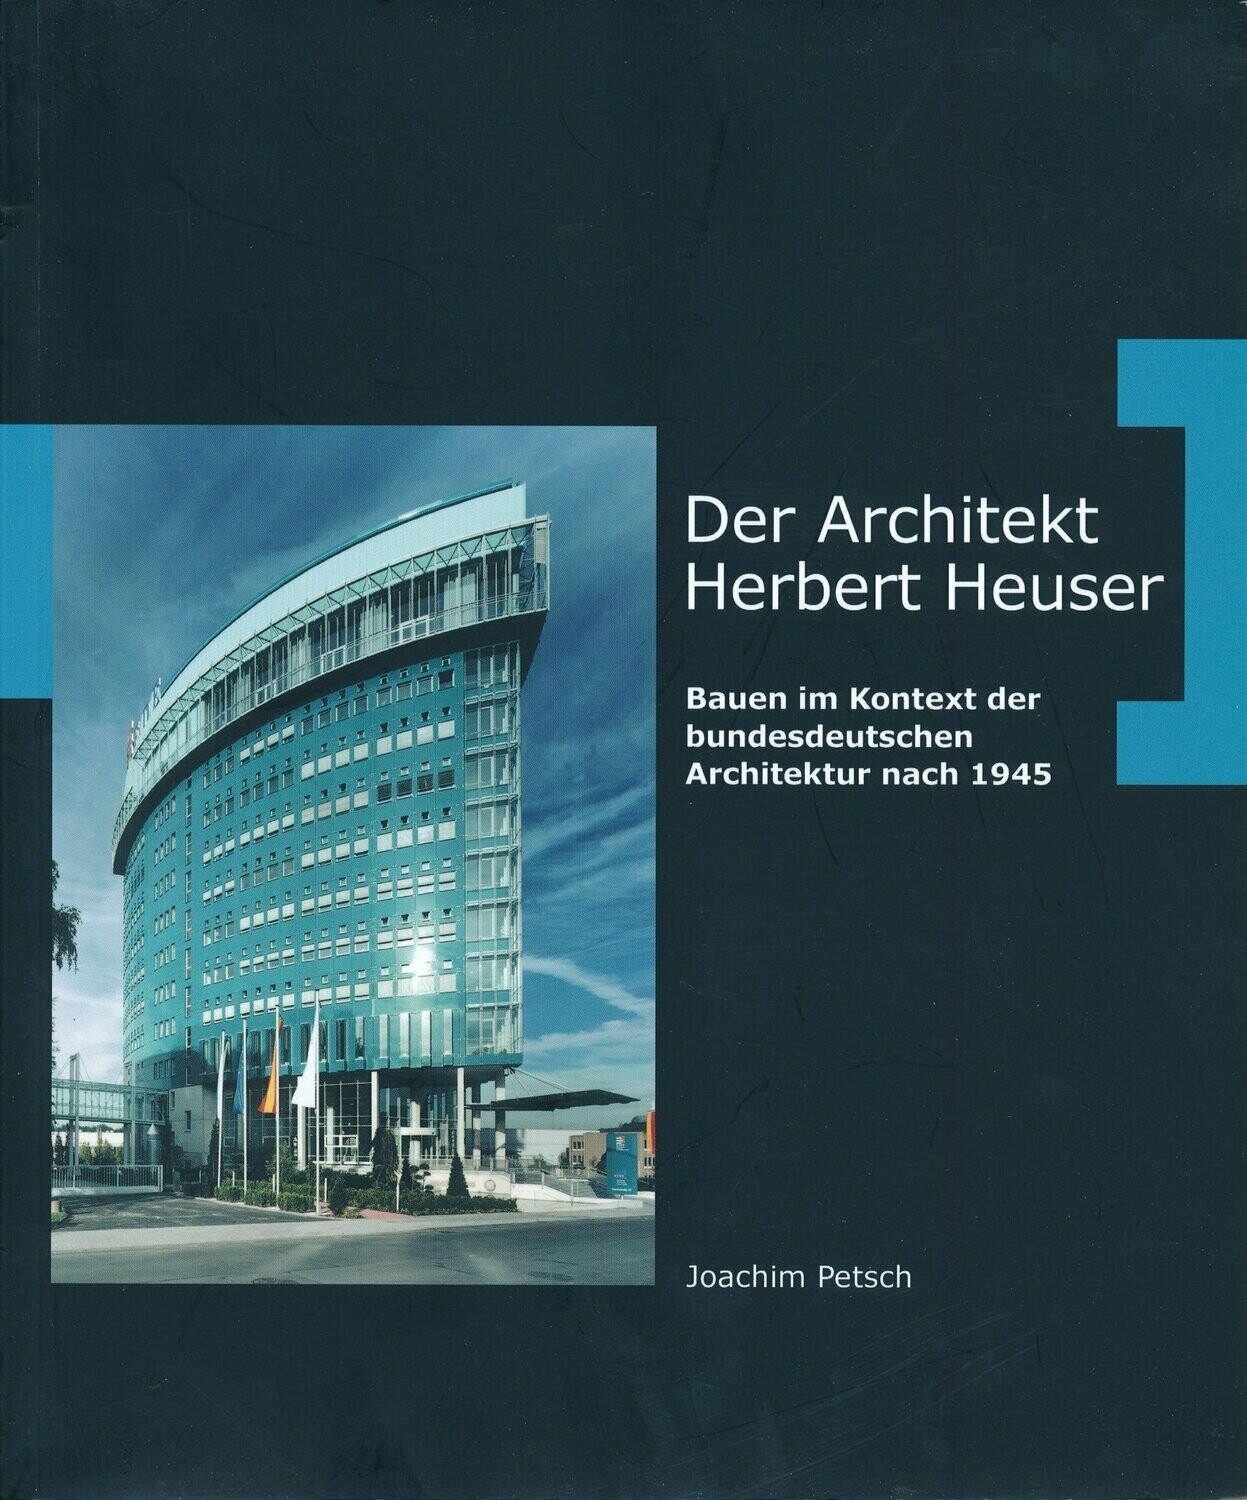 Der Architekt Herbert Heuser